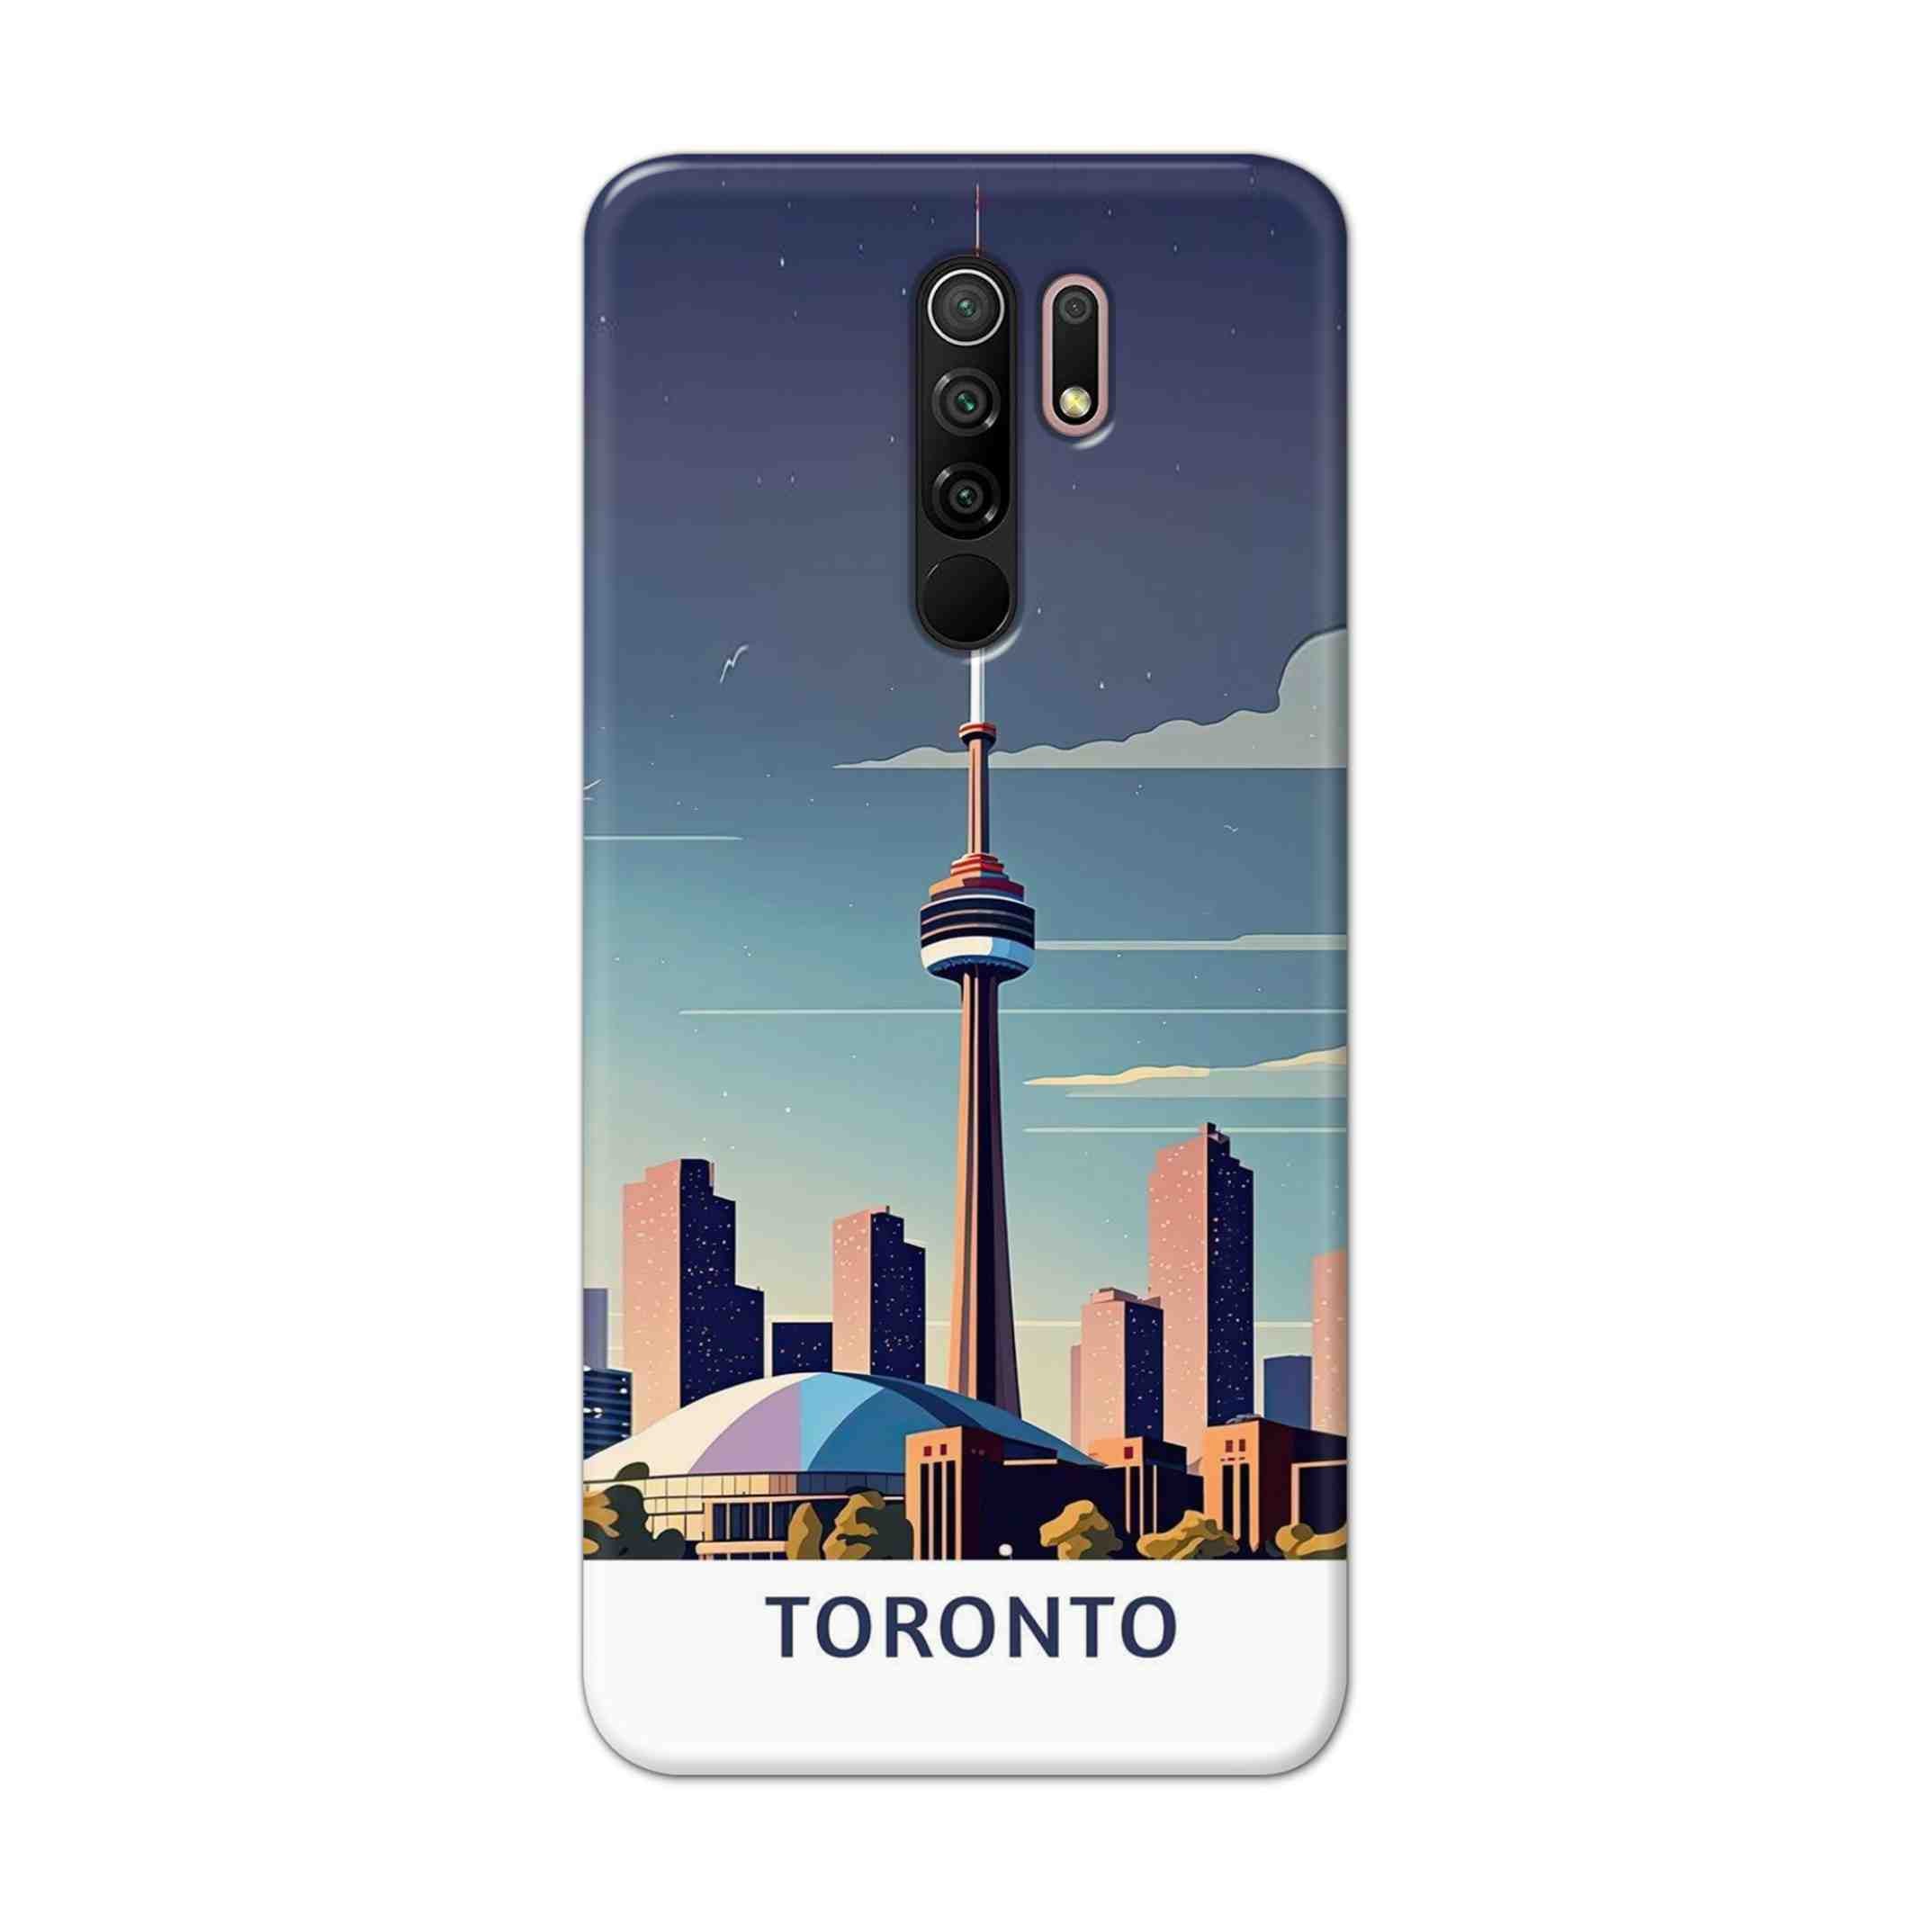 Buy Toronto Hard Back Mobile Phone Case Cover For Xiaomi Redmi 9 Prime Online